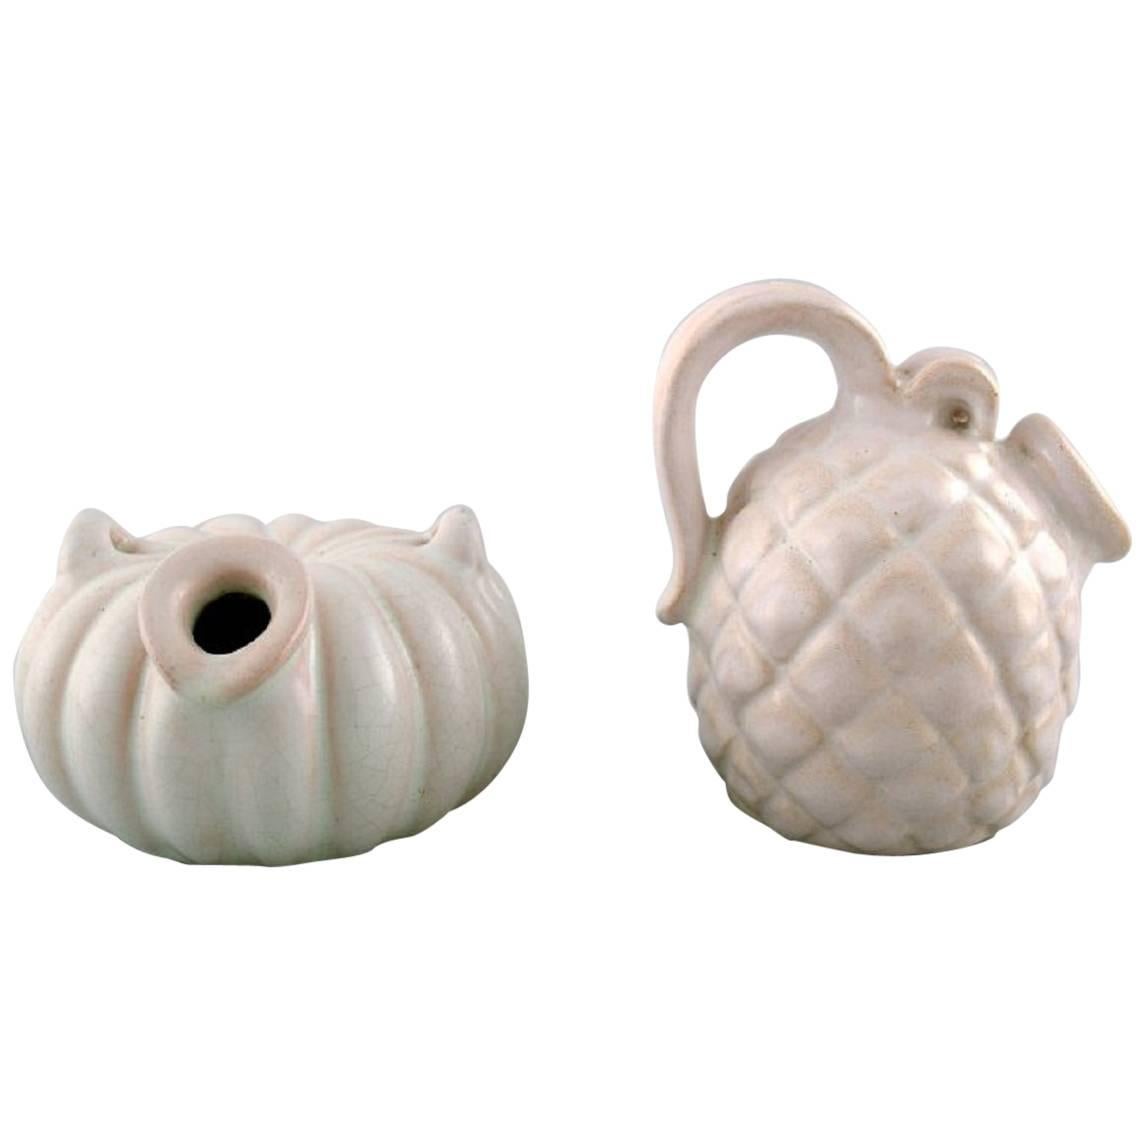 Michael Andersen, Two Ceramic Vases or Pots, 1950s-1960s